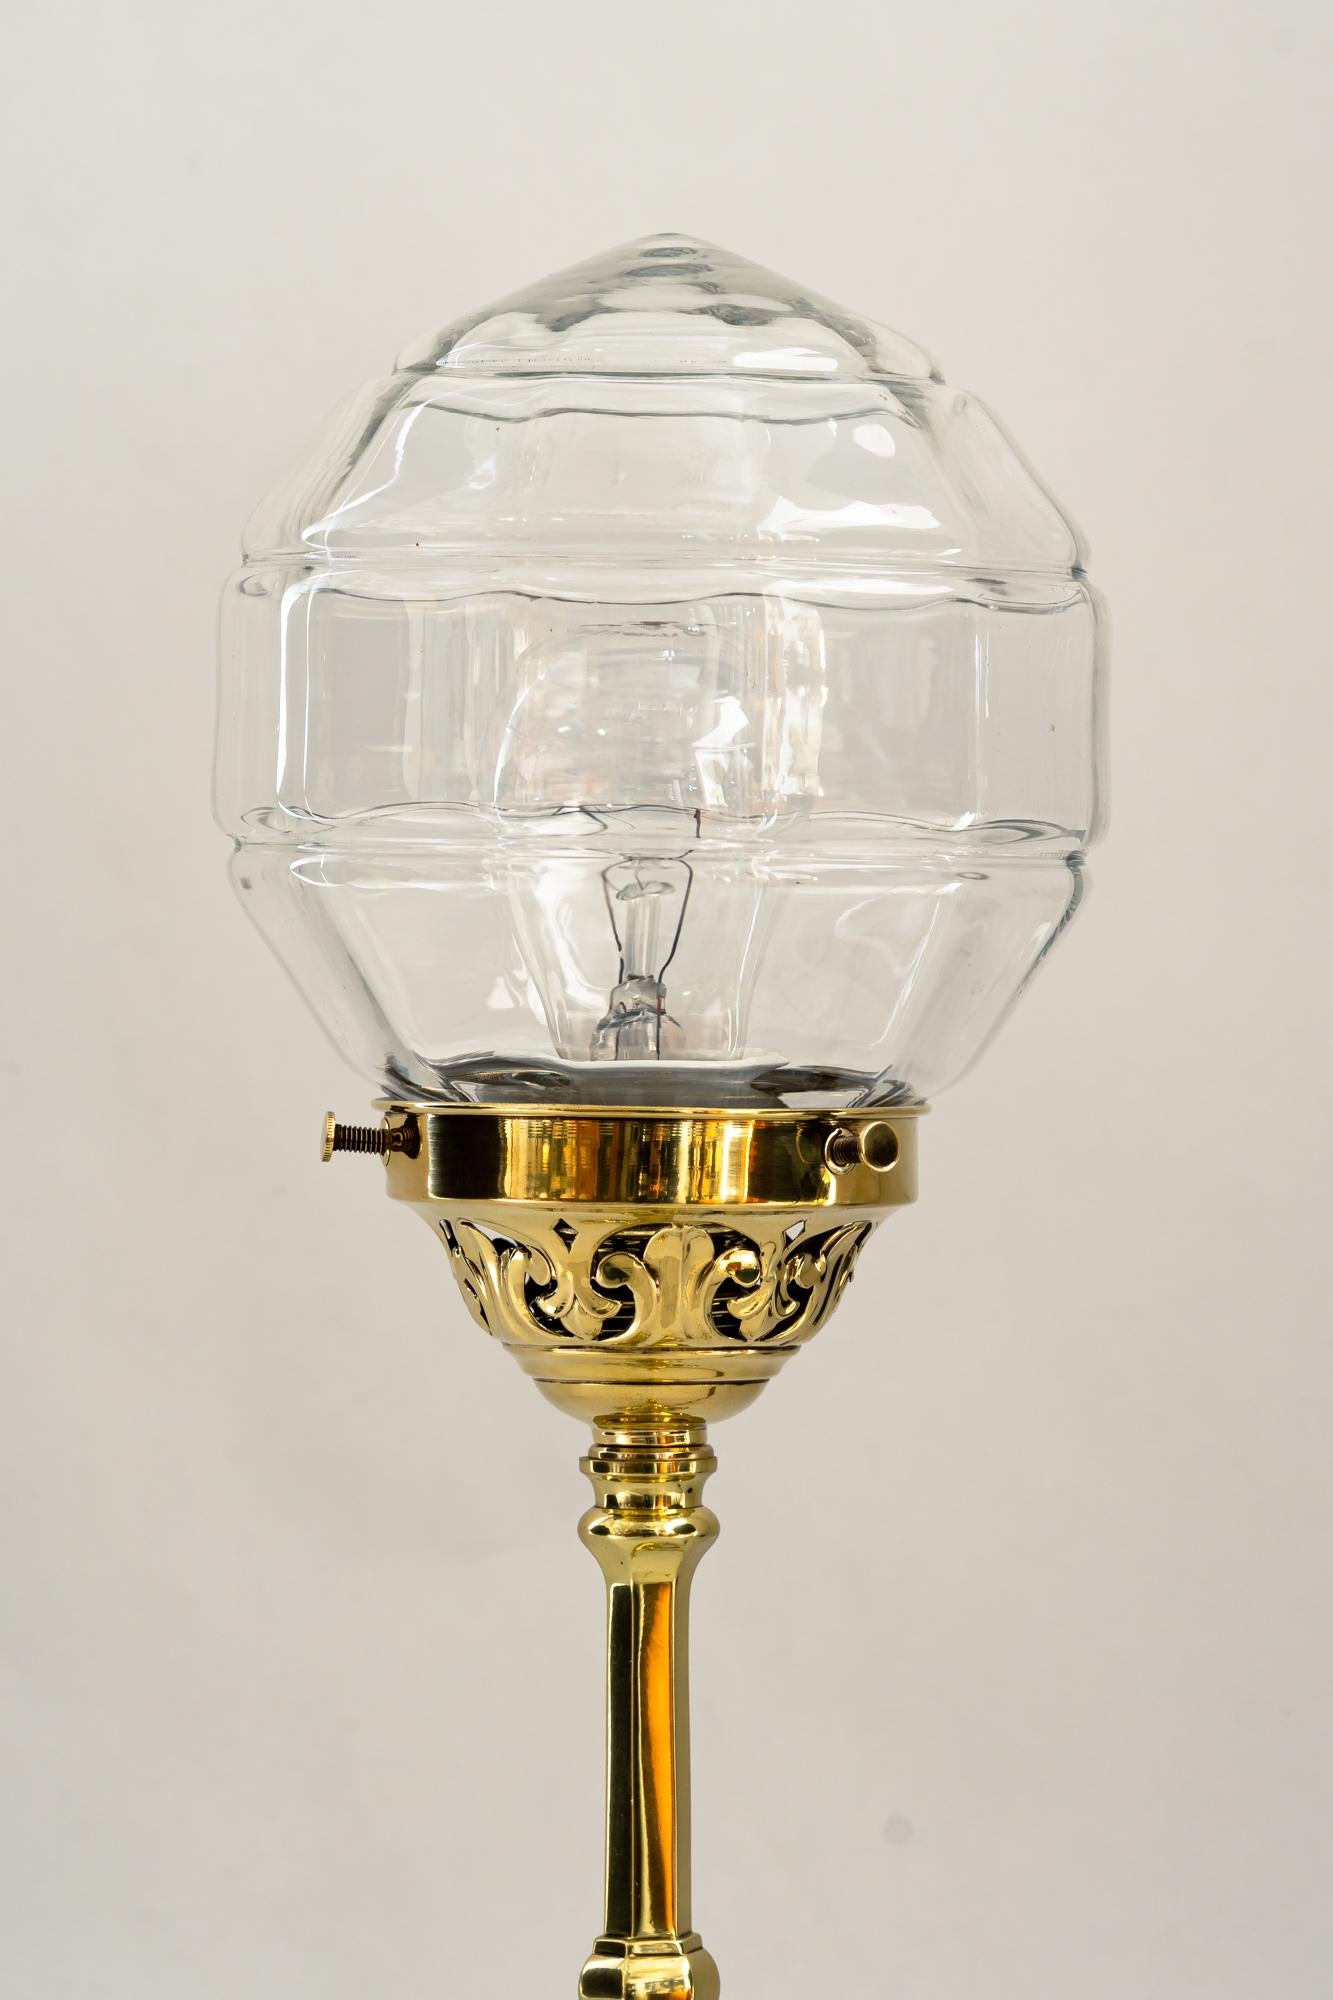 Austrian Jugendstil Table Lamp with Original Glass Shade, Vienna, Around 1910s